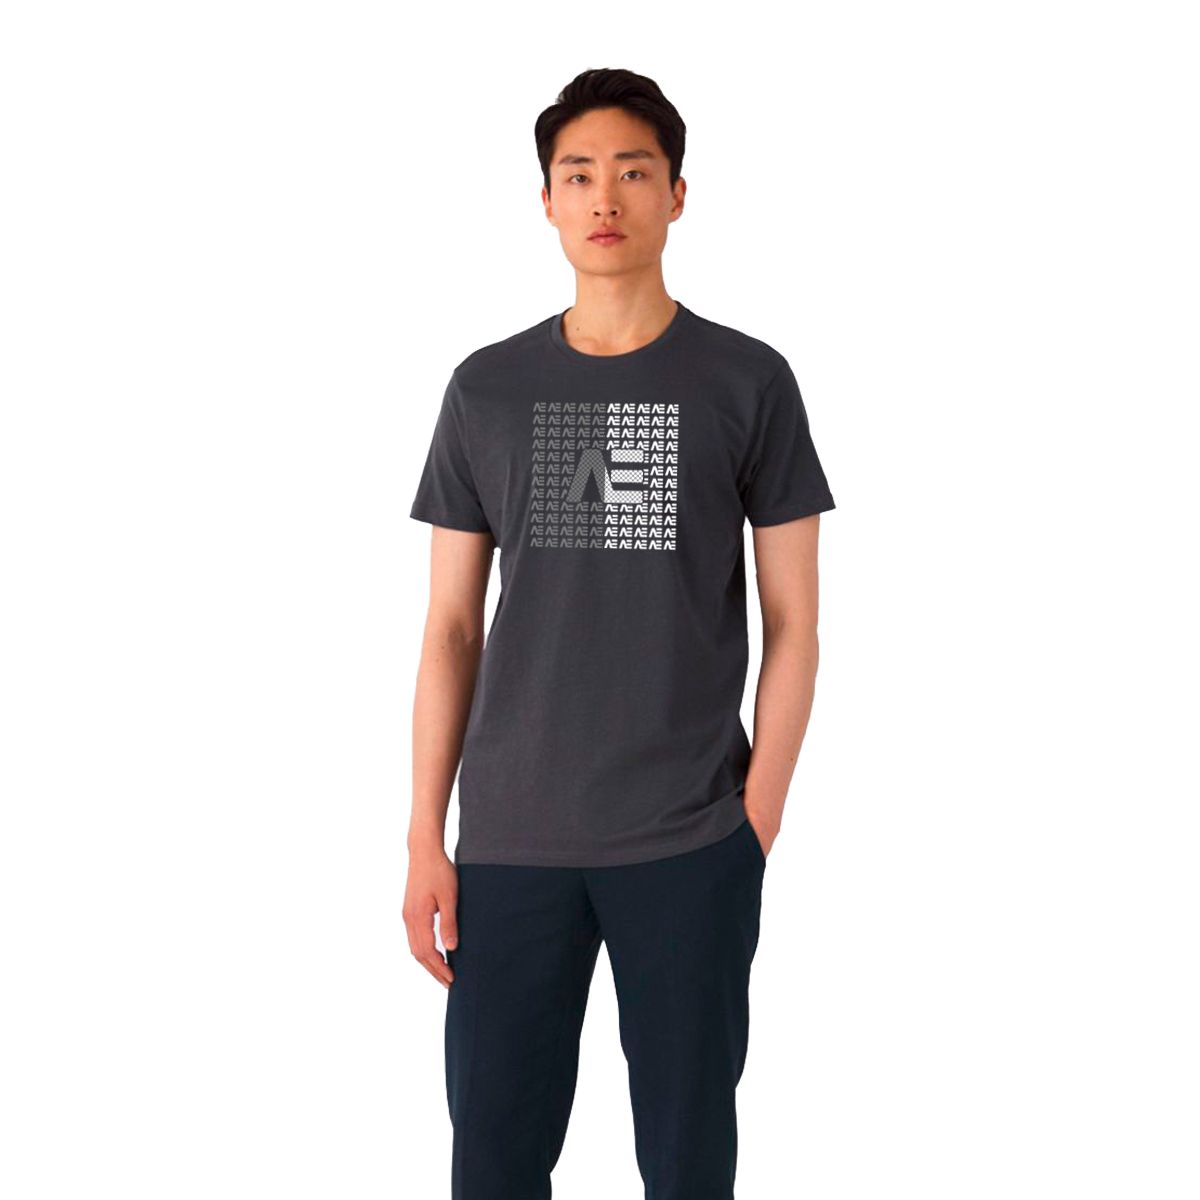 Daevor Camiseta Casual-Orgánica 103 - Comprar camisetas de algodon organico - camisetas algodón orgánico hombre